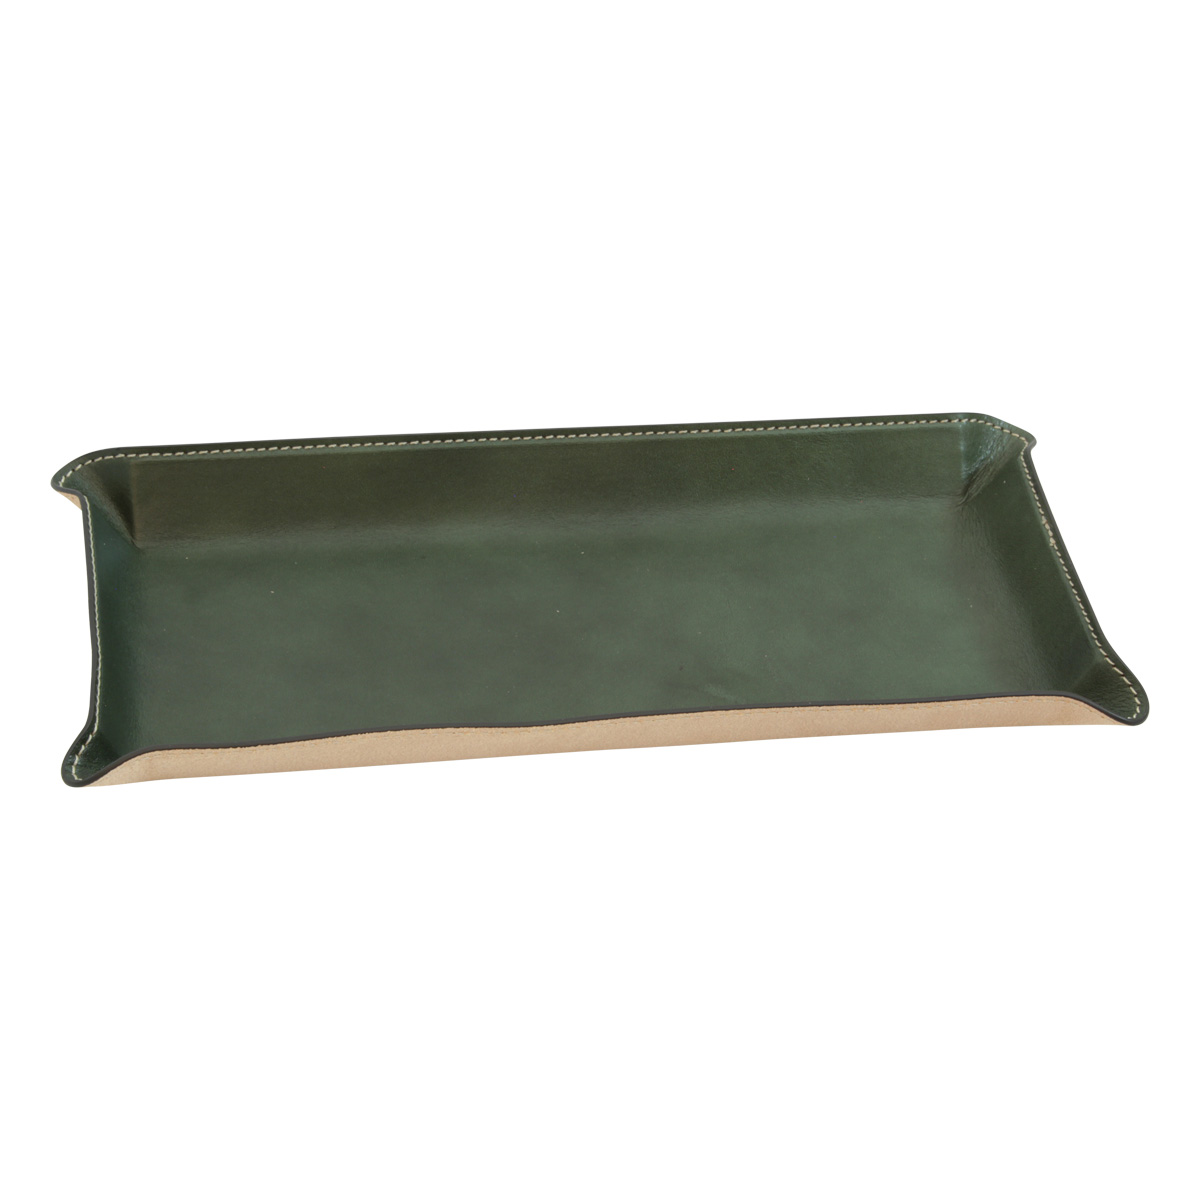 Leather desk tray - green | 762089VE | EURO | Old Angler Firenze